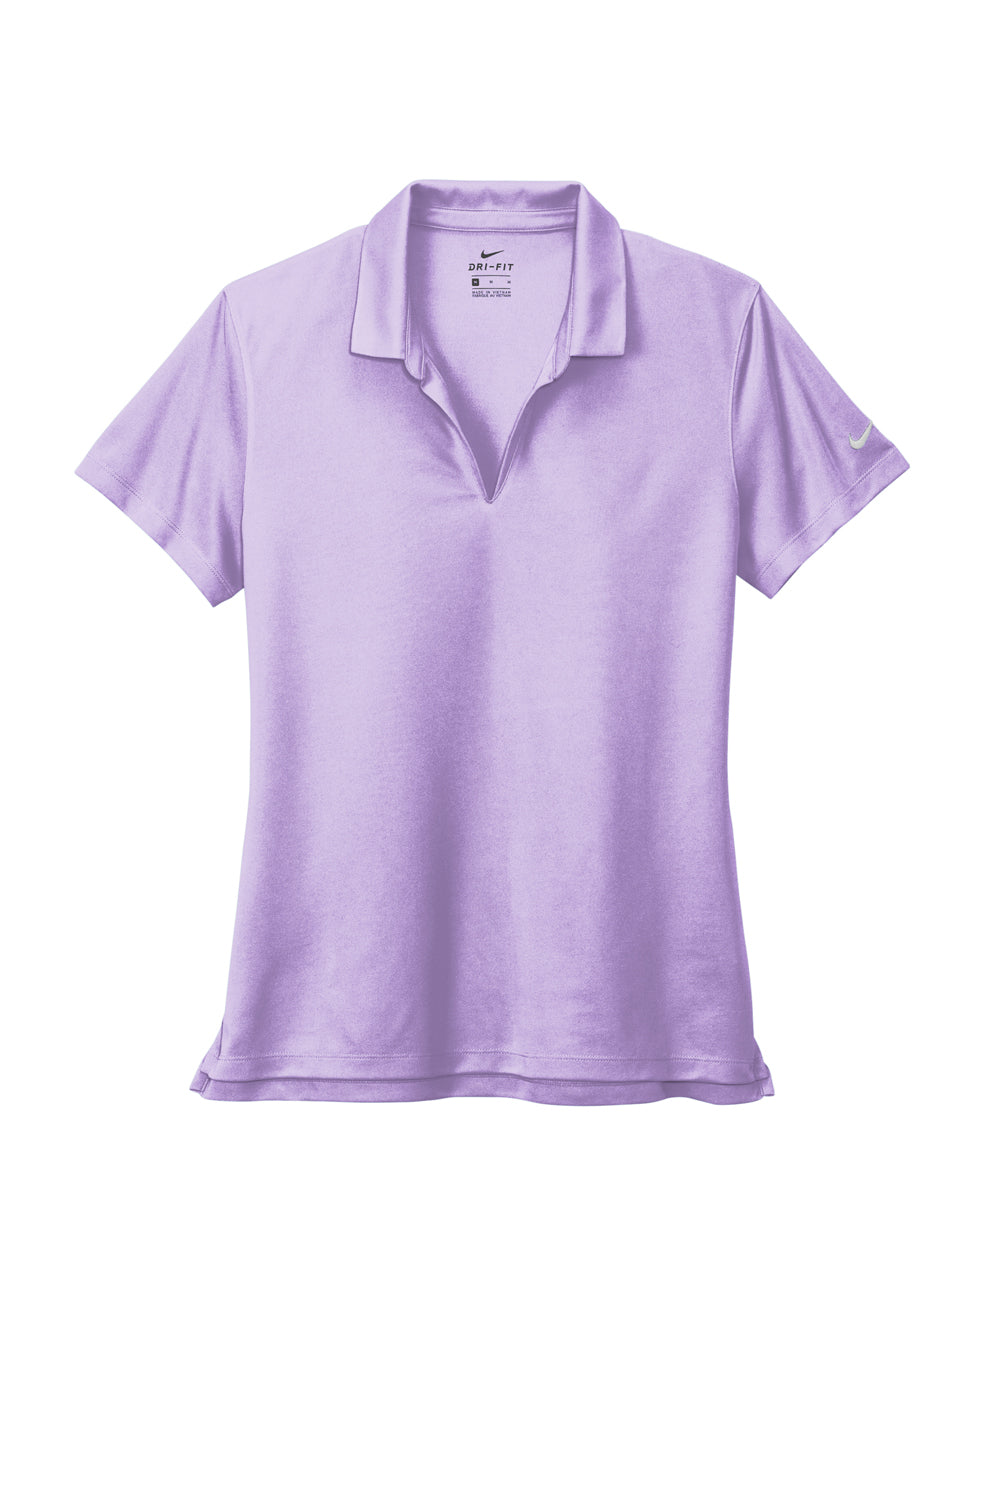 Nike NKDC1991 Womens Dri-Fit Moisture Wicking Micro Pique 2.0 Short Sleeve Polo Shirt Urban Lilac Purple Flat Front